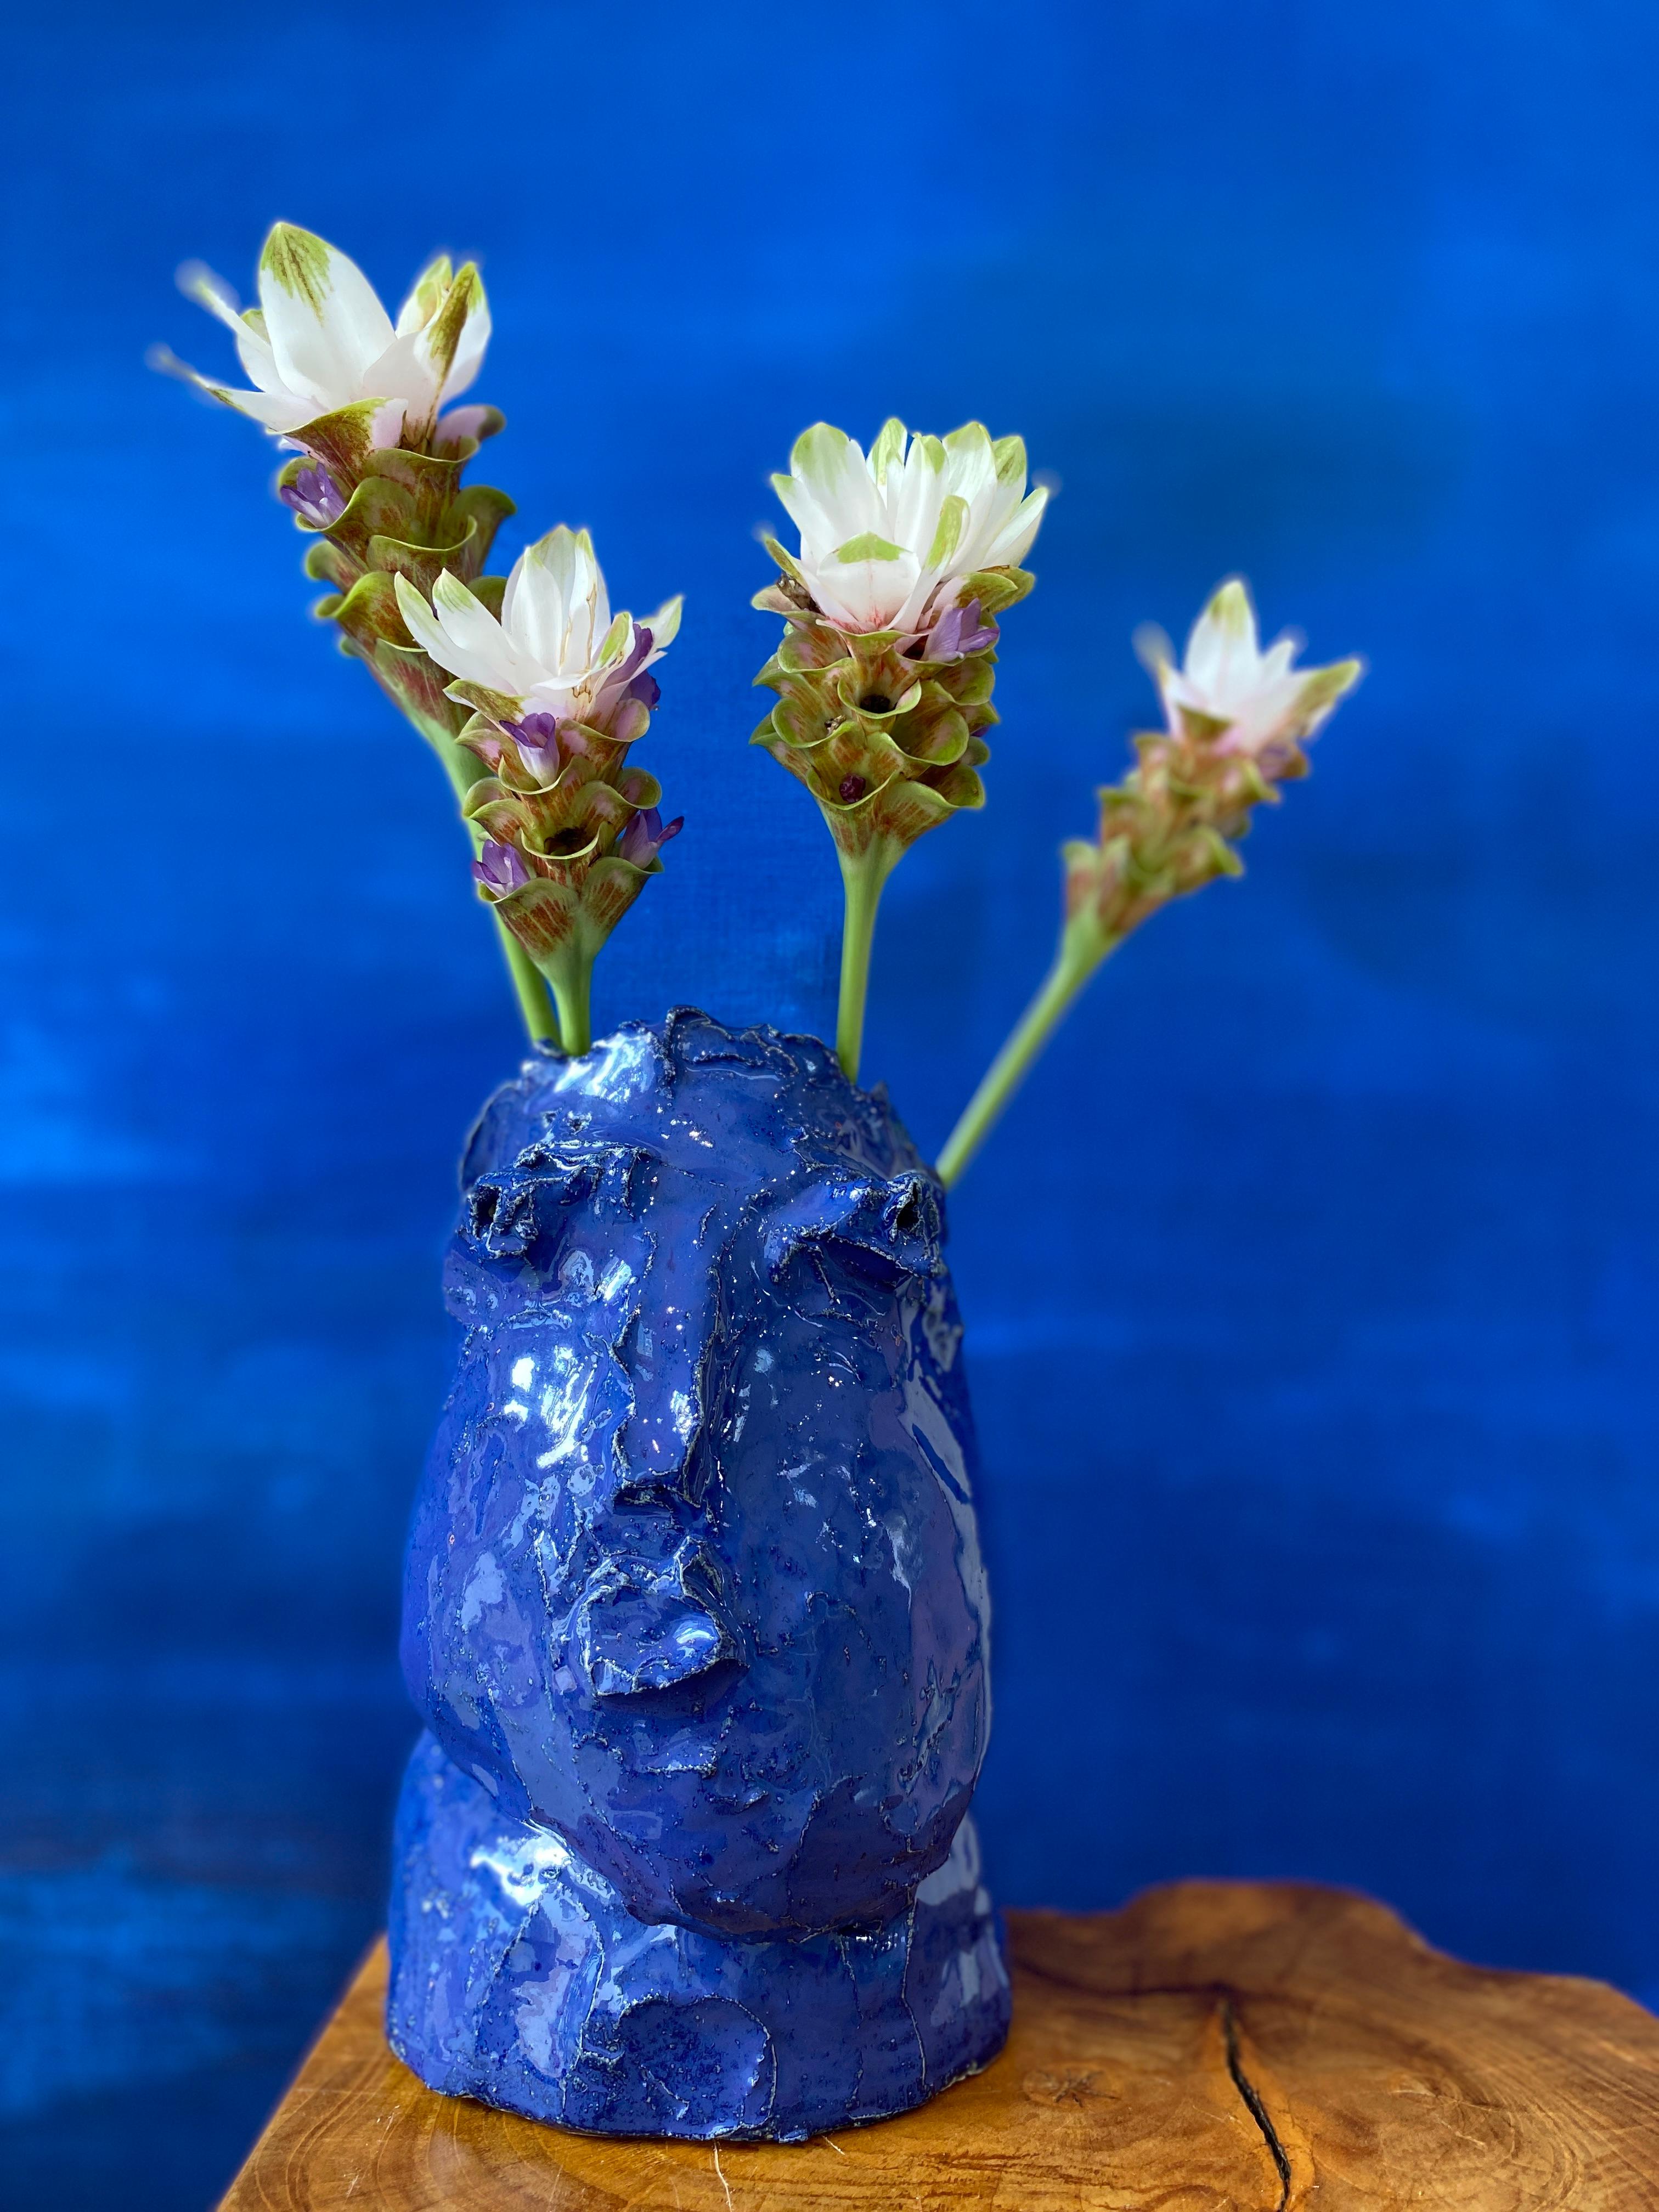 Cobalt blue rustic wabi sabi hand sculpted glazed clay head face vessel vase For Sale 10